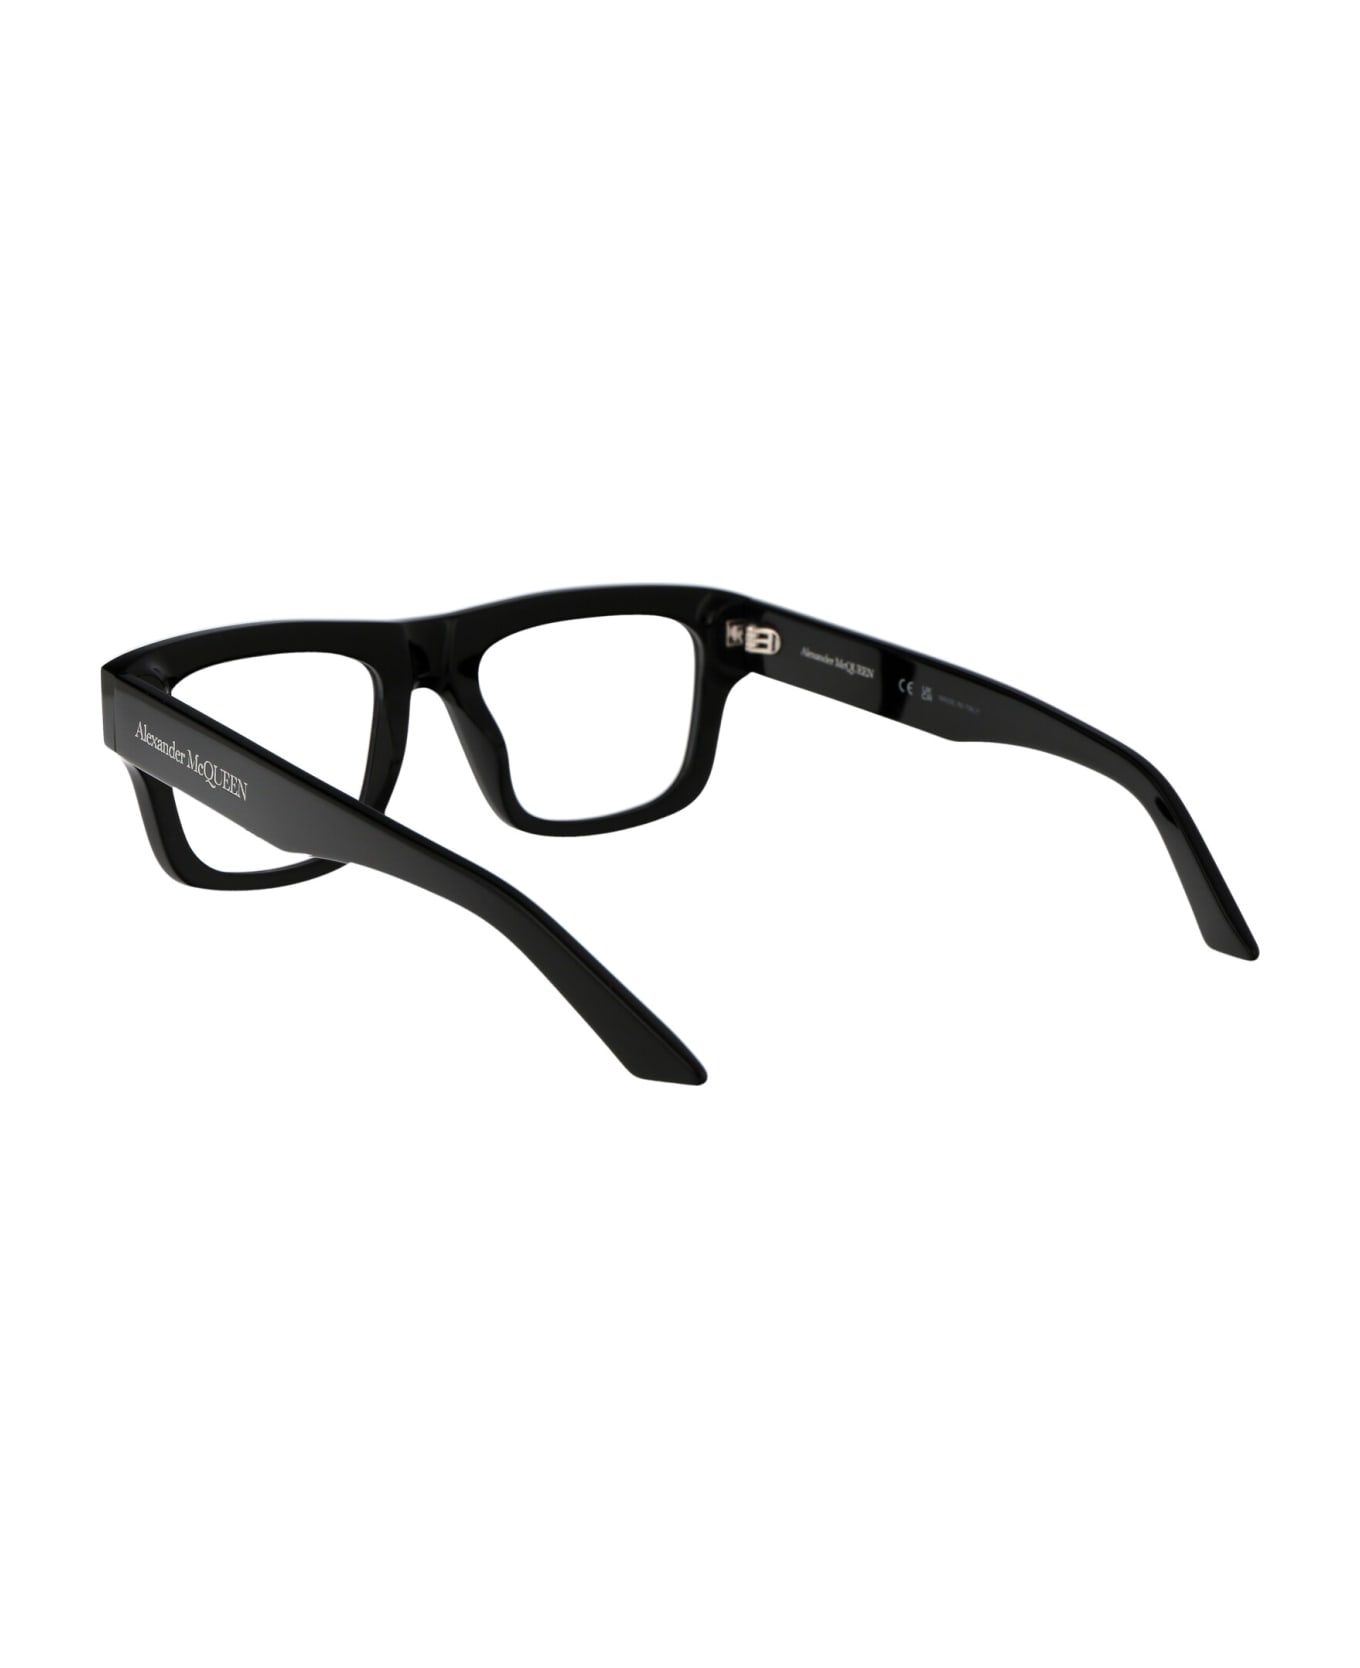 Alexander McQueen Eyewear Am0452o Glasses - 001 BLACK BLACK TRANSPARENT